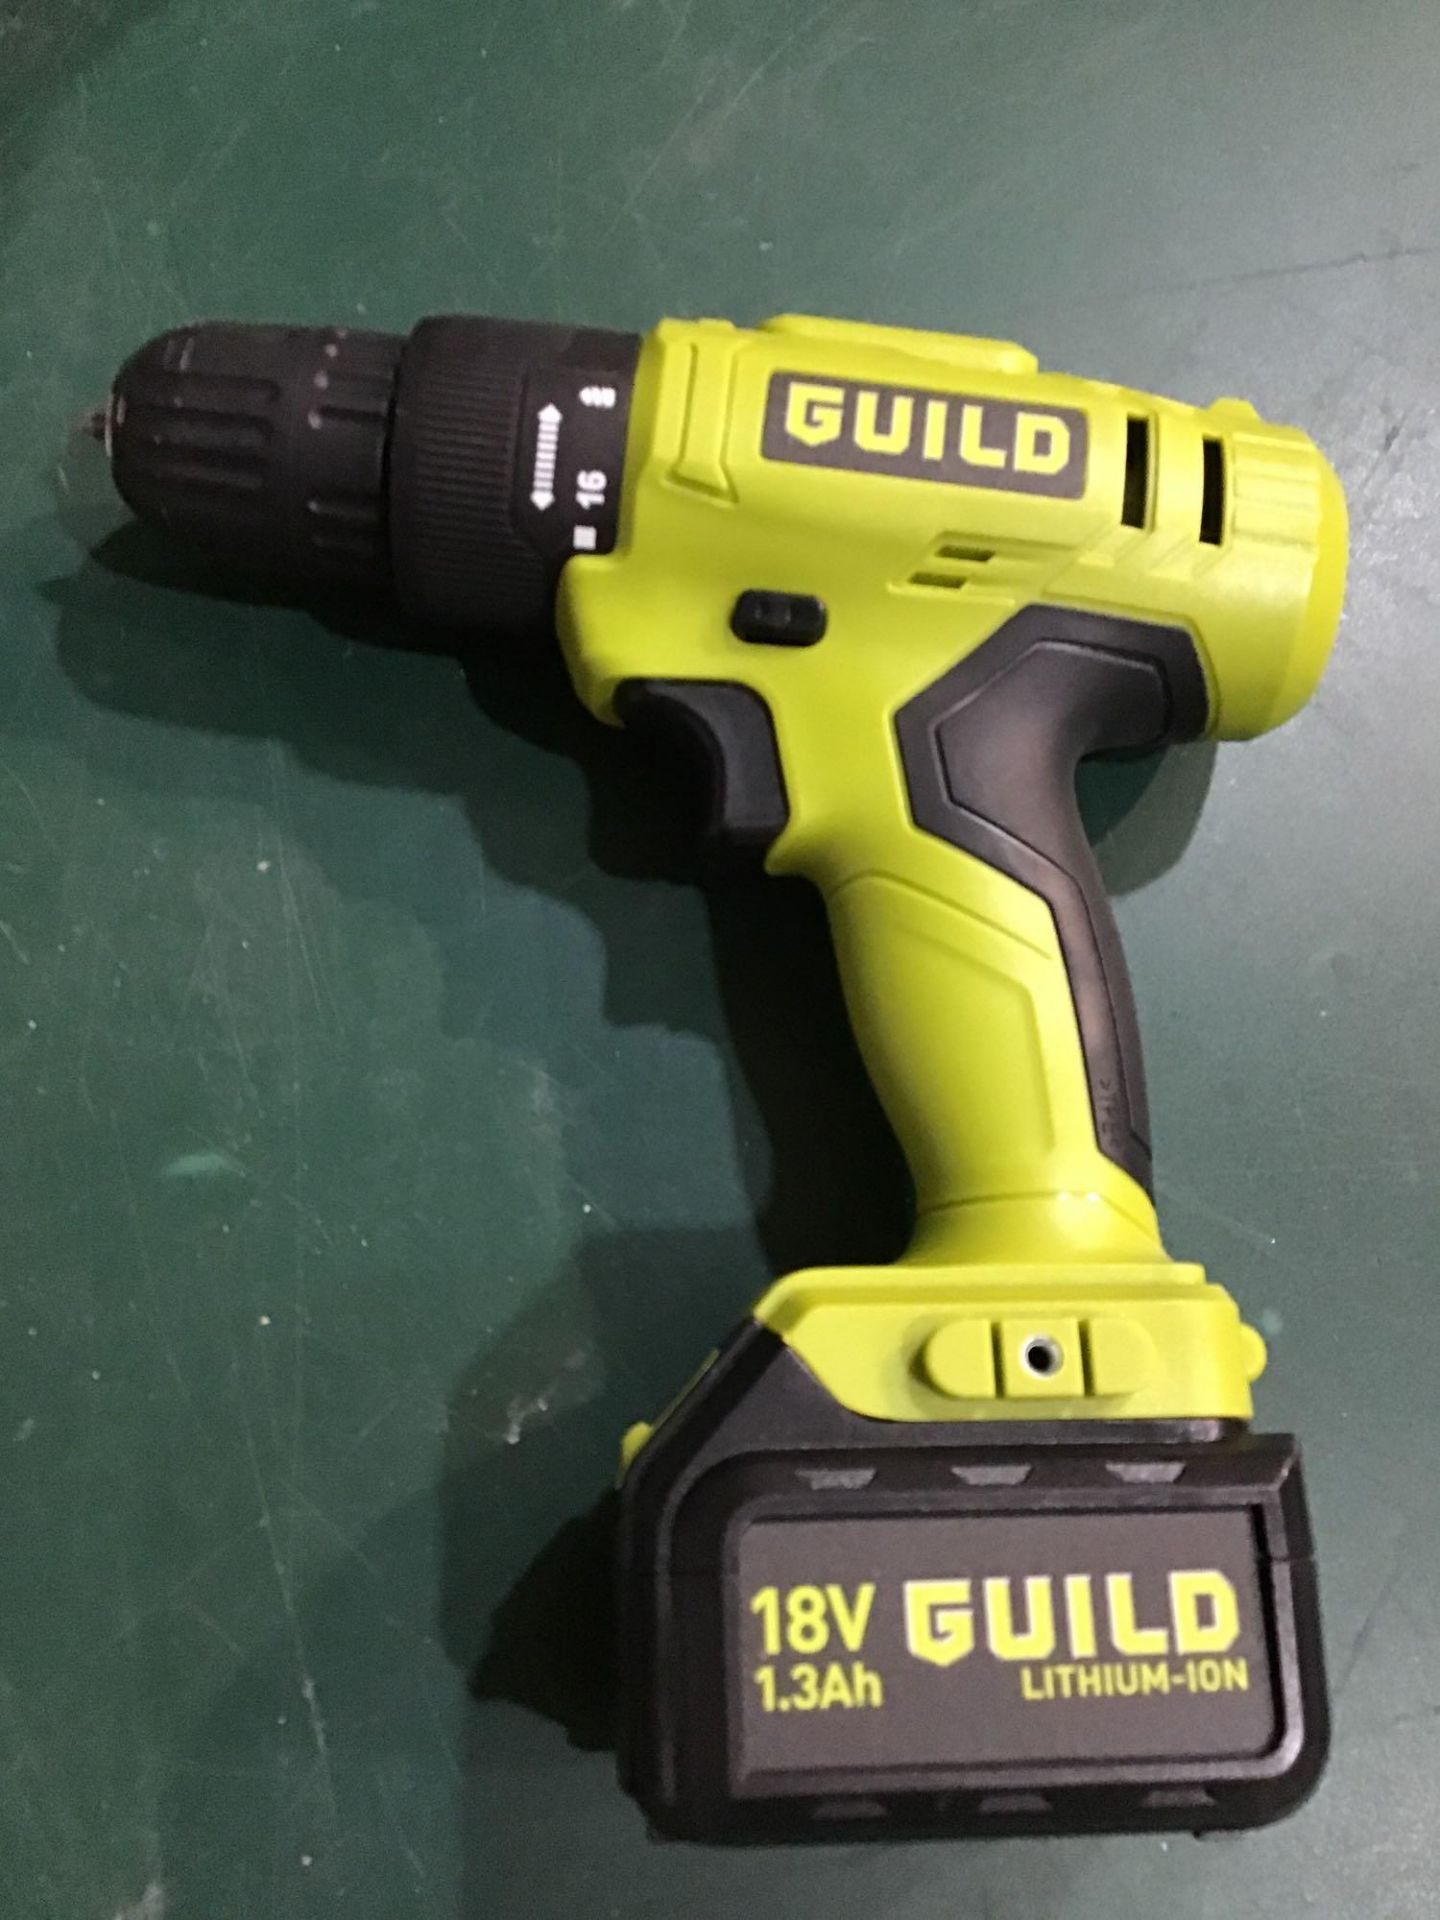 Guild 1.3Ah Cordless Hammer Drill - 18V £40.00 RRP - Image 2 of 4